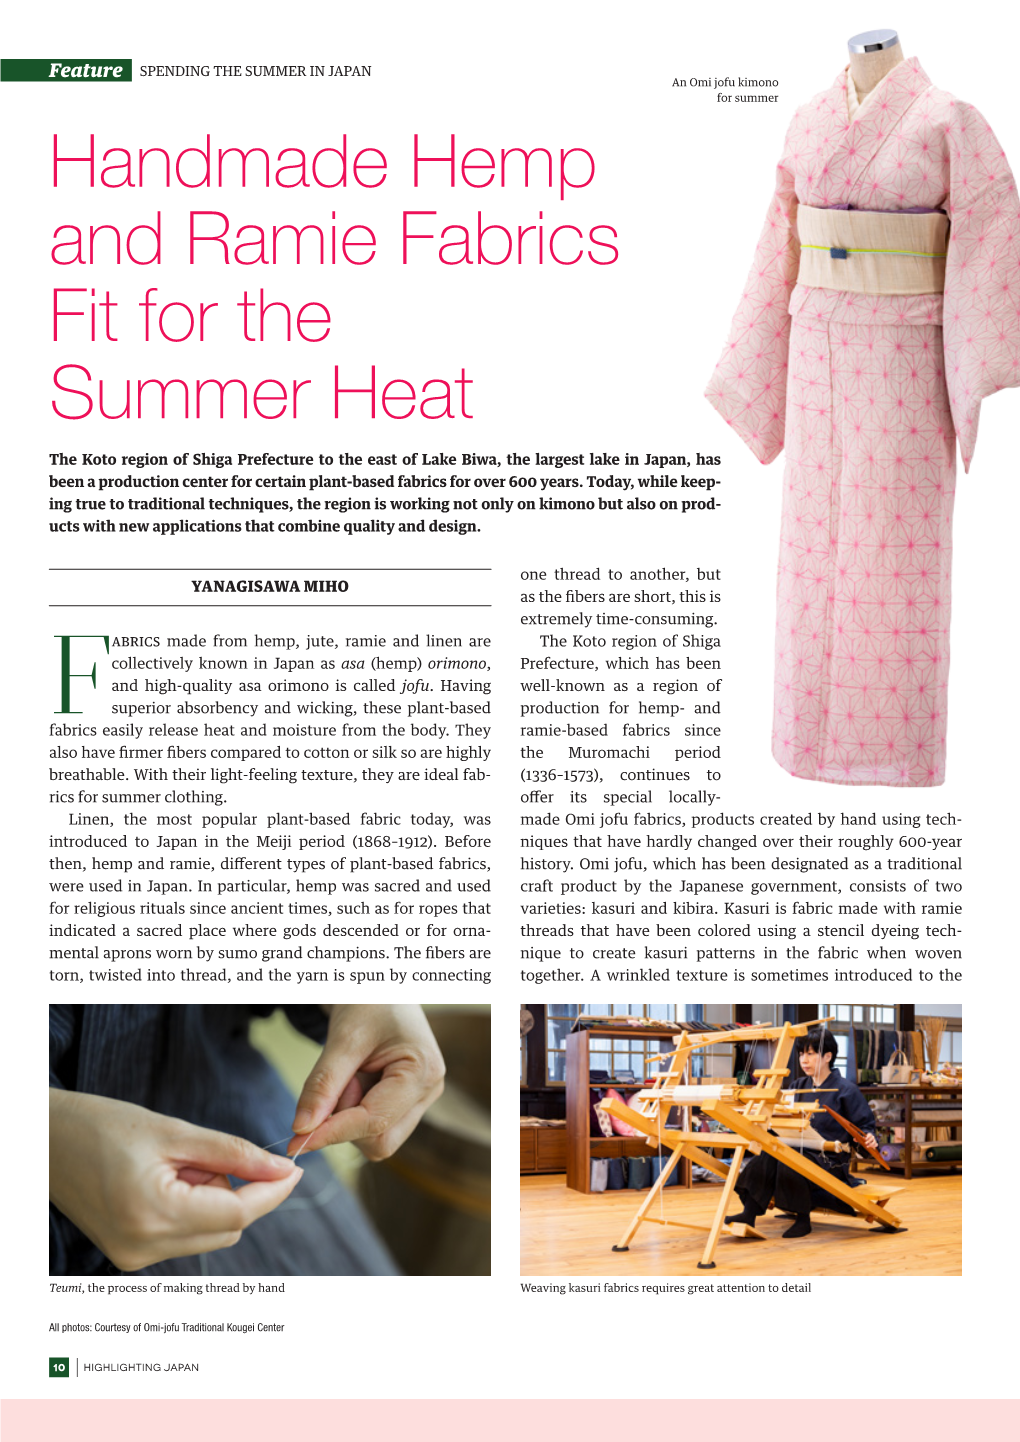 Handmade Hemp and Ramie Fabrics Fit for the Summer Heat